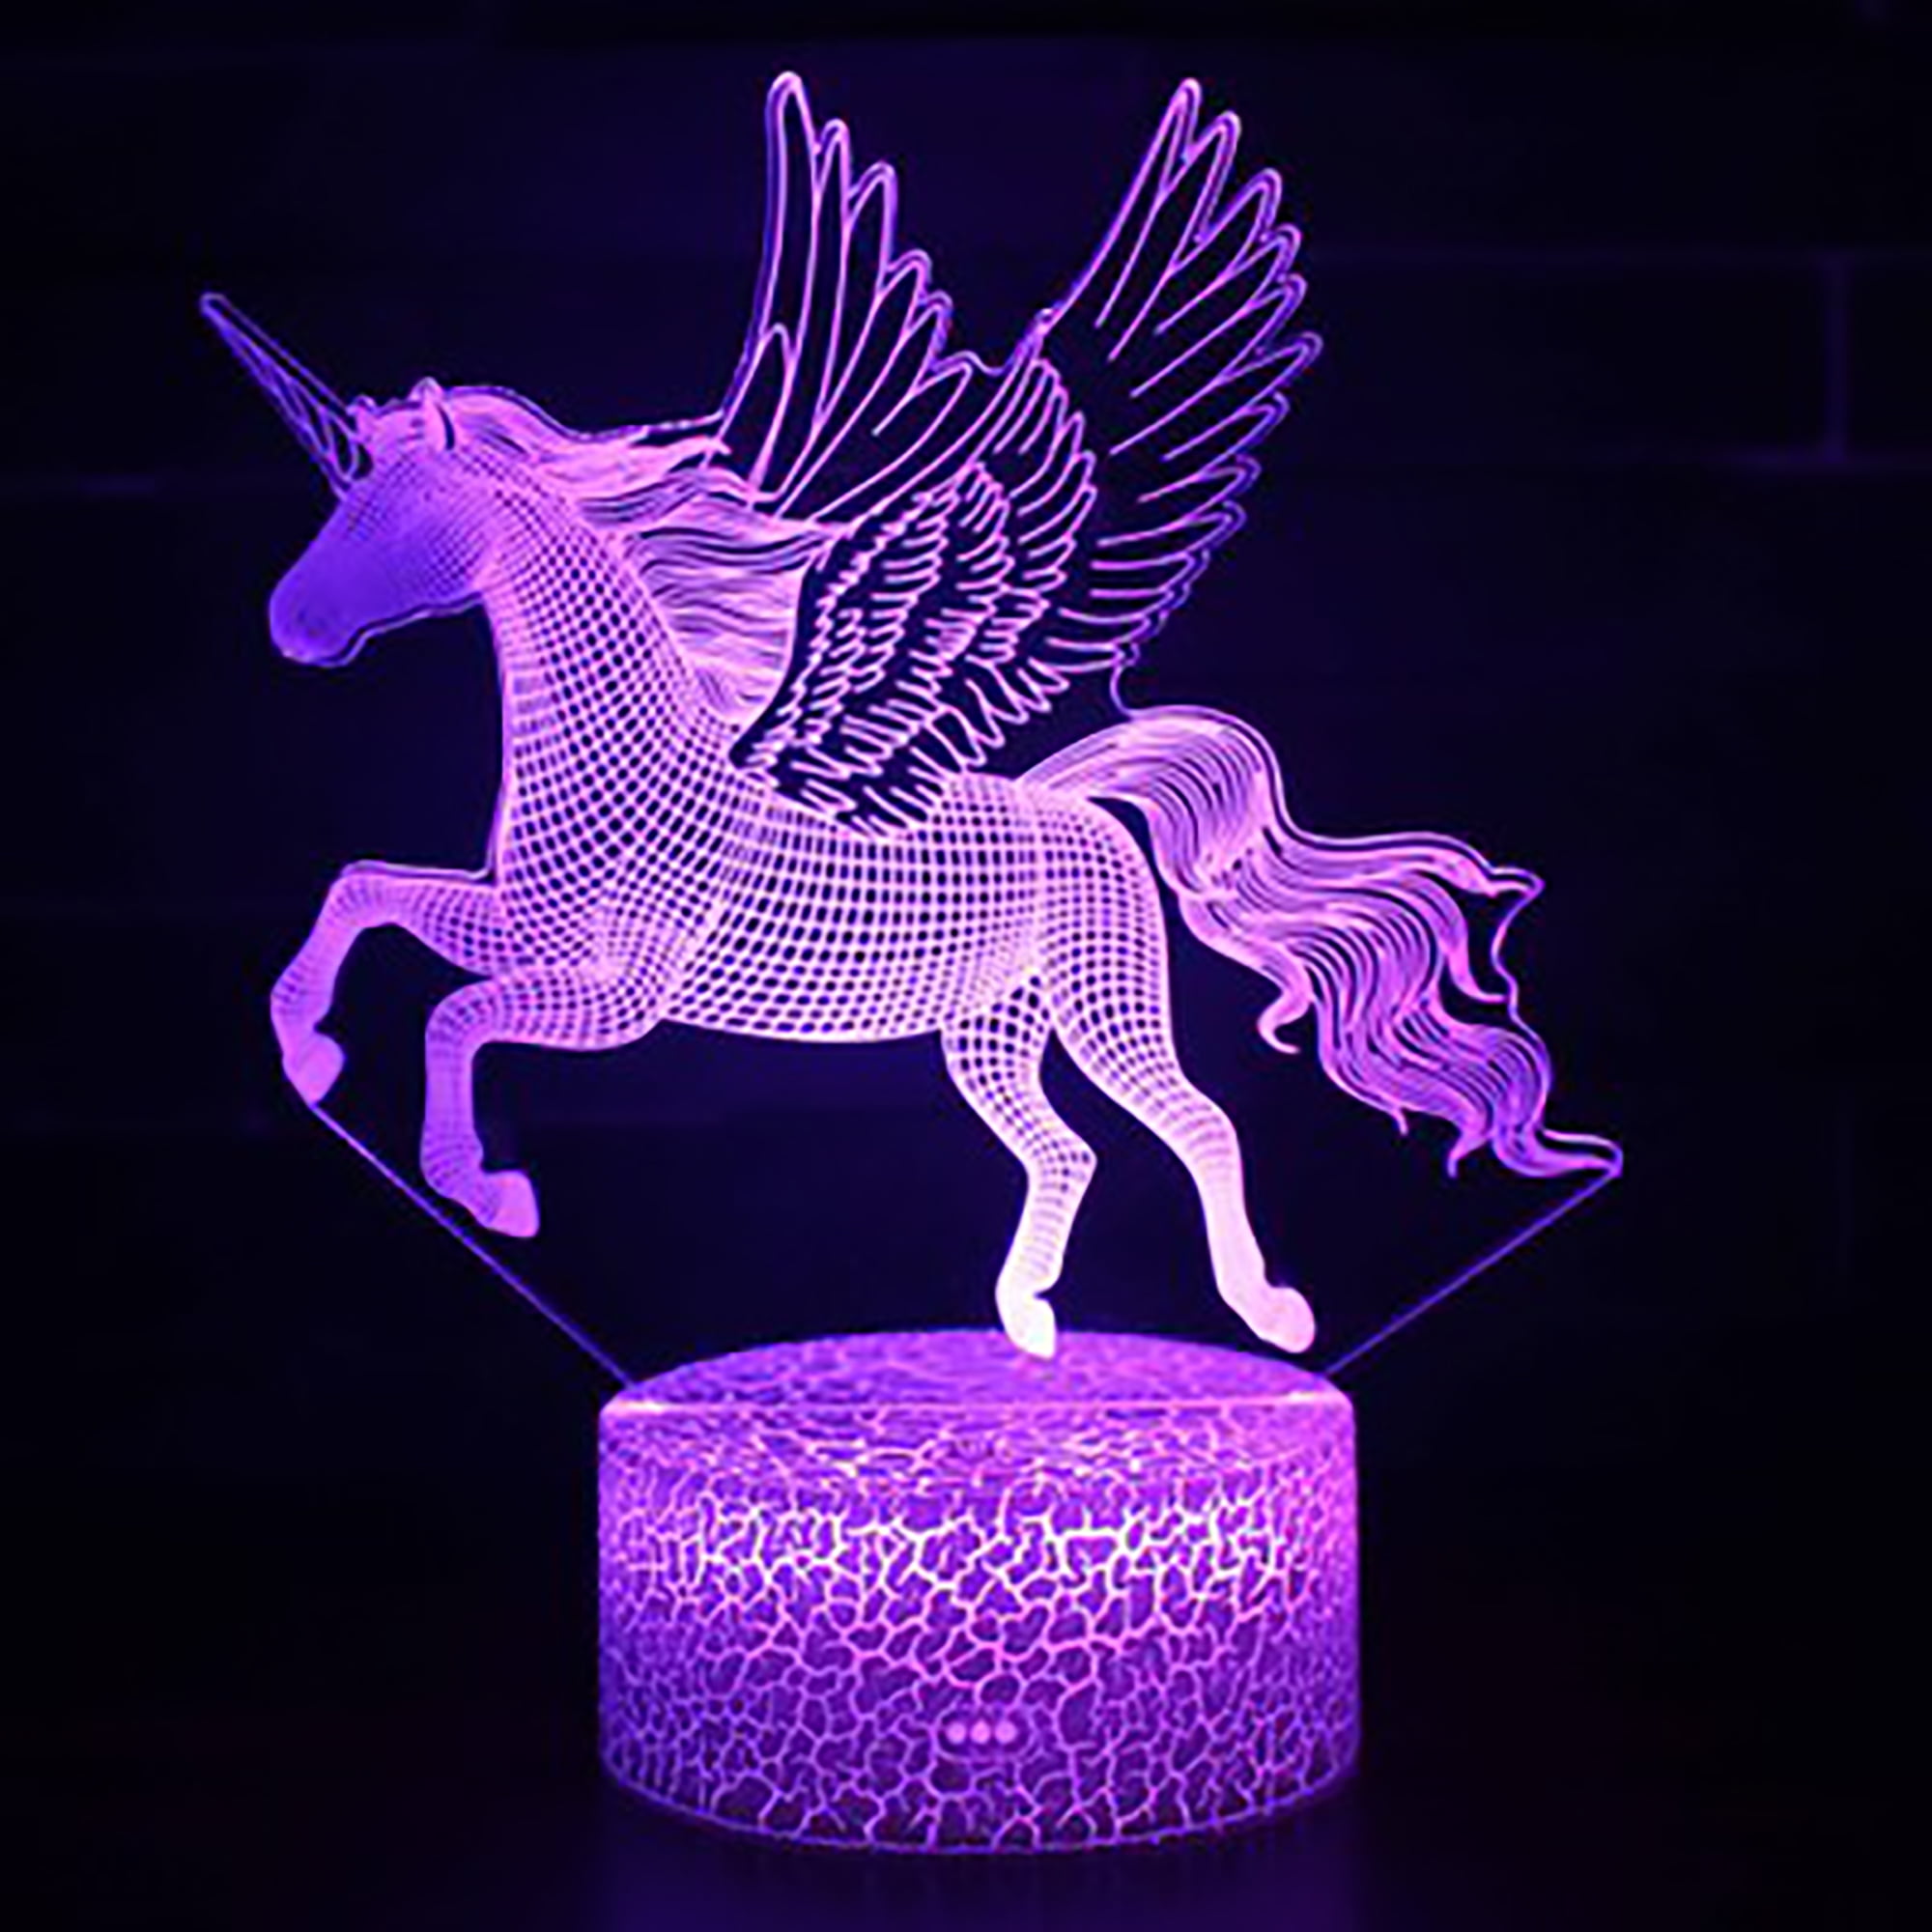 KiBlue 3D Unicorn Light Unicorn Touch Lamp 3D Unicorn Illusion Night Light,Dimmable 7 Colors Unicorn Light Battery or USB Powered,Kids Unicorn Decor for Christmas,Kids Room,Living Room,Bedroom 